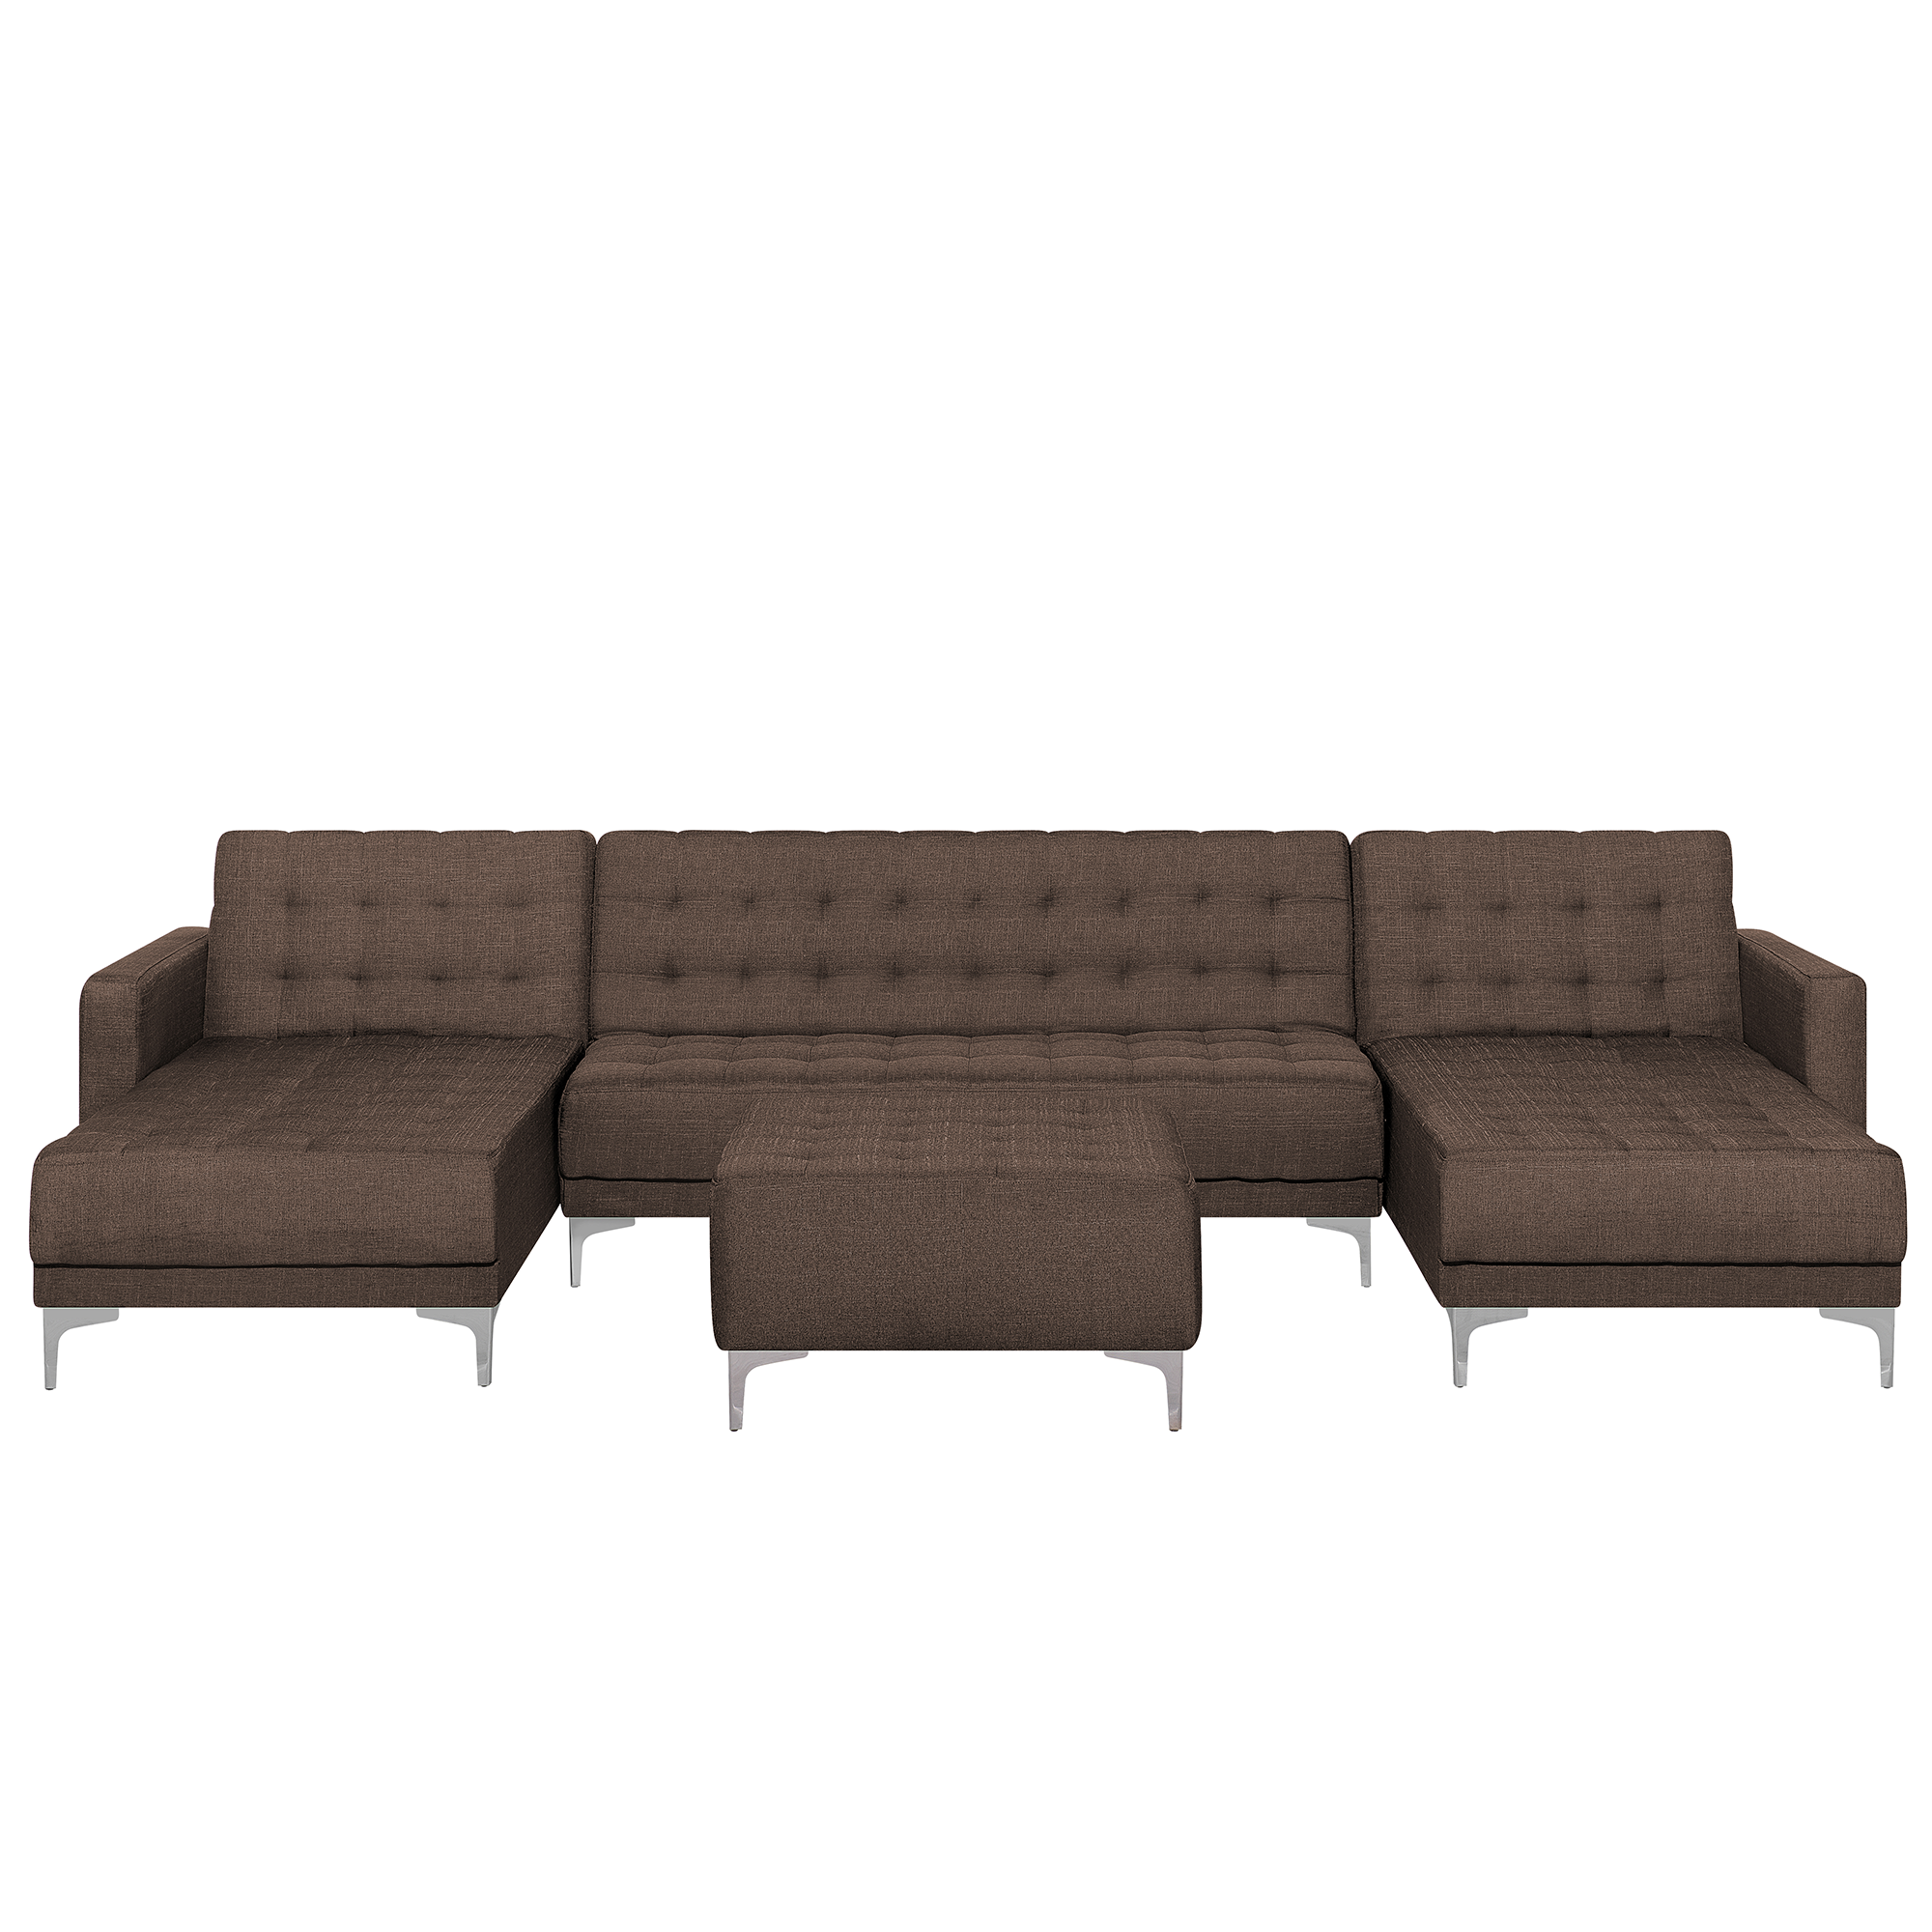 Beliani U-shaped Modular Sofa Brown Fabric Sleeping Function with Ottoman Tufted